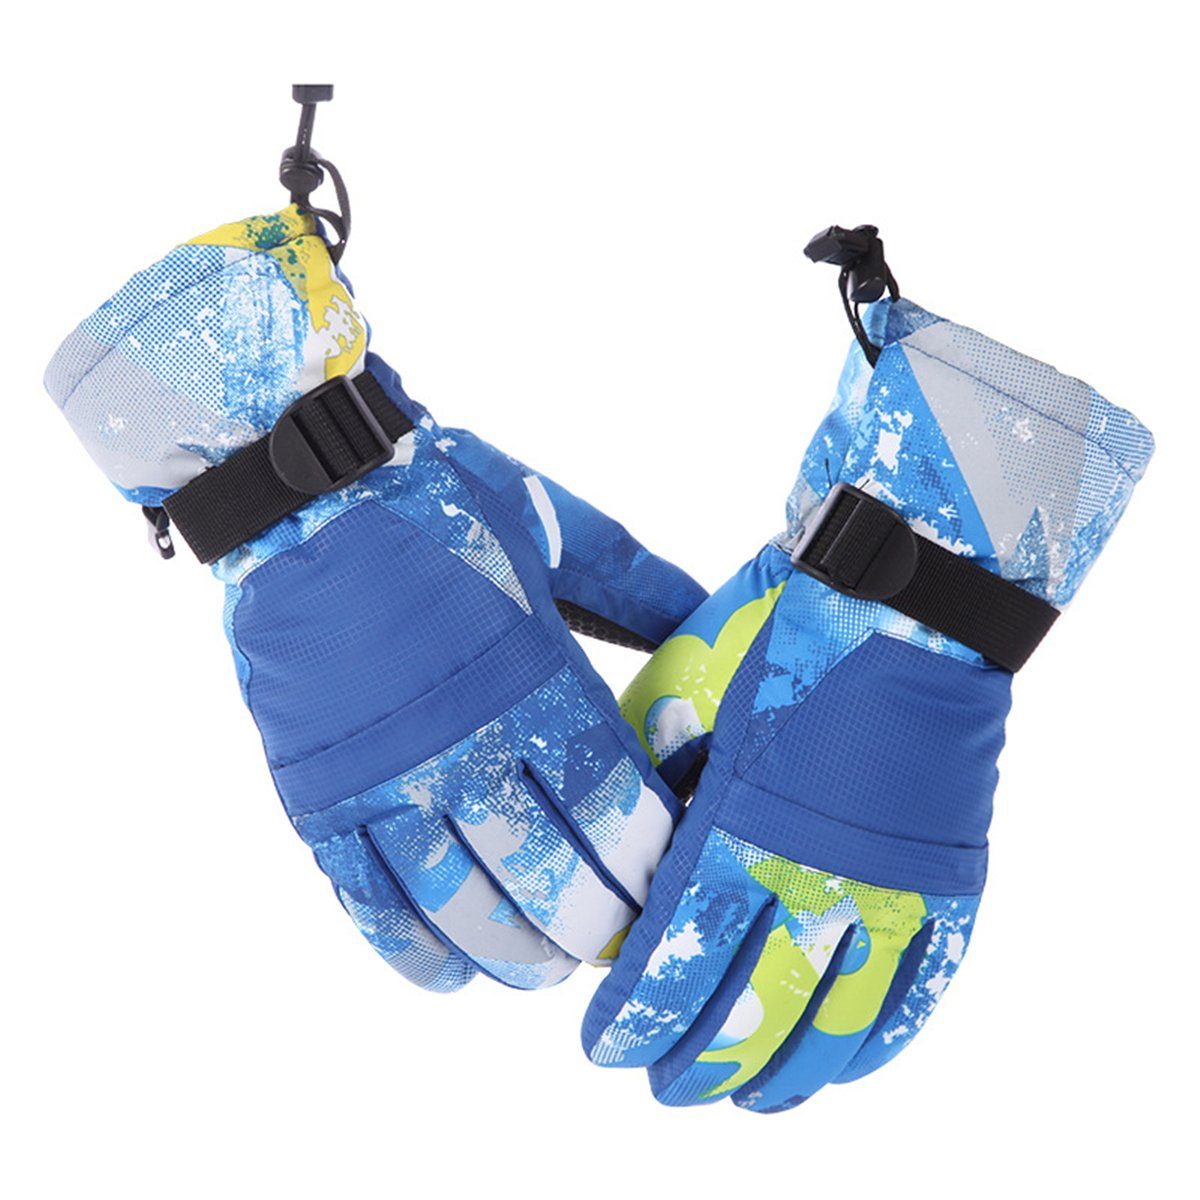 Die Sterne Langlaufhandschuhe Kinder/Männer/Damen Winter-Outdoor-Sport-Snowboard-Handschuhe Blau